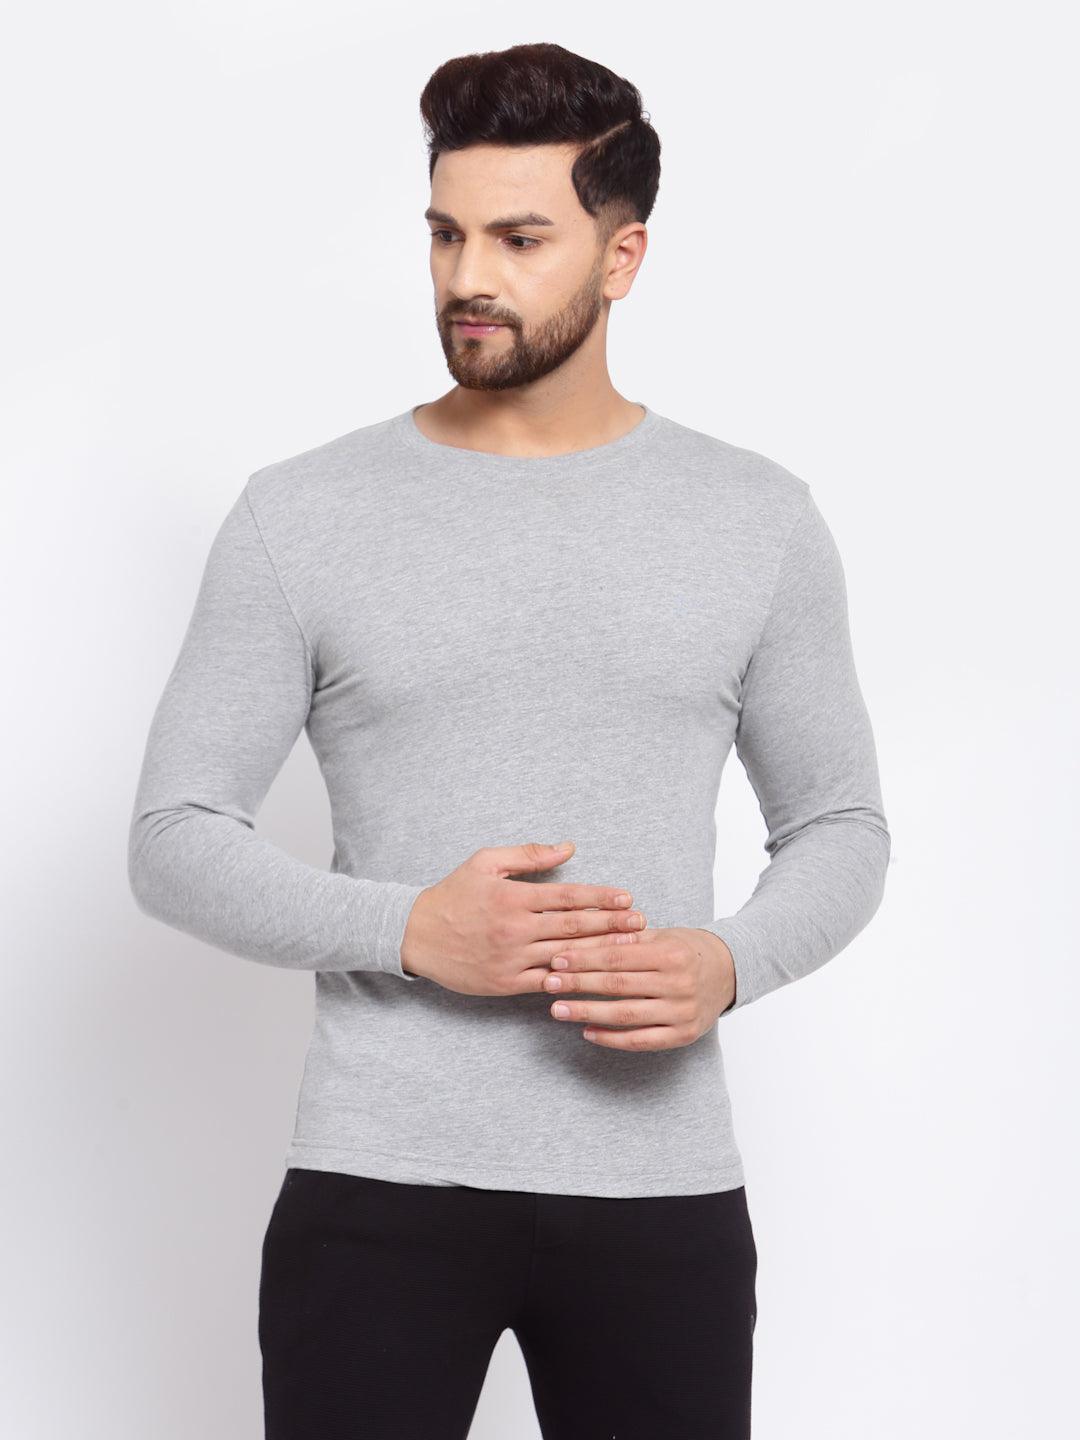 Get Solid V-Neck Full Sleeves T-Shirt at ₹ 449